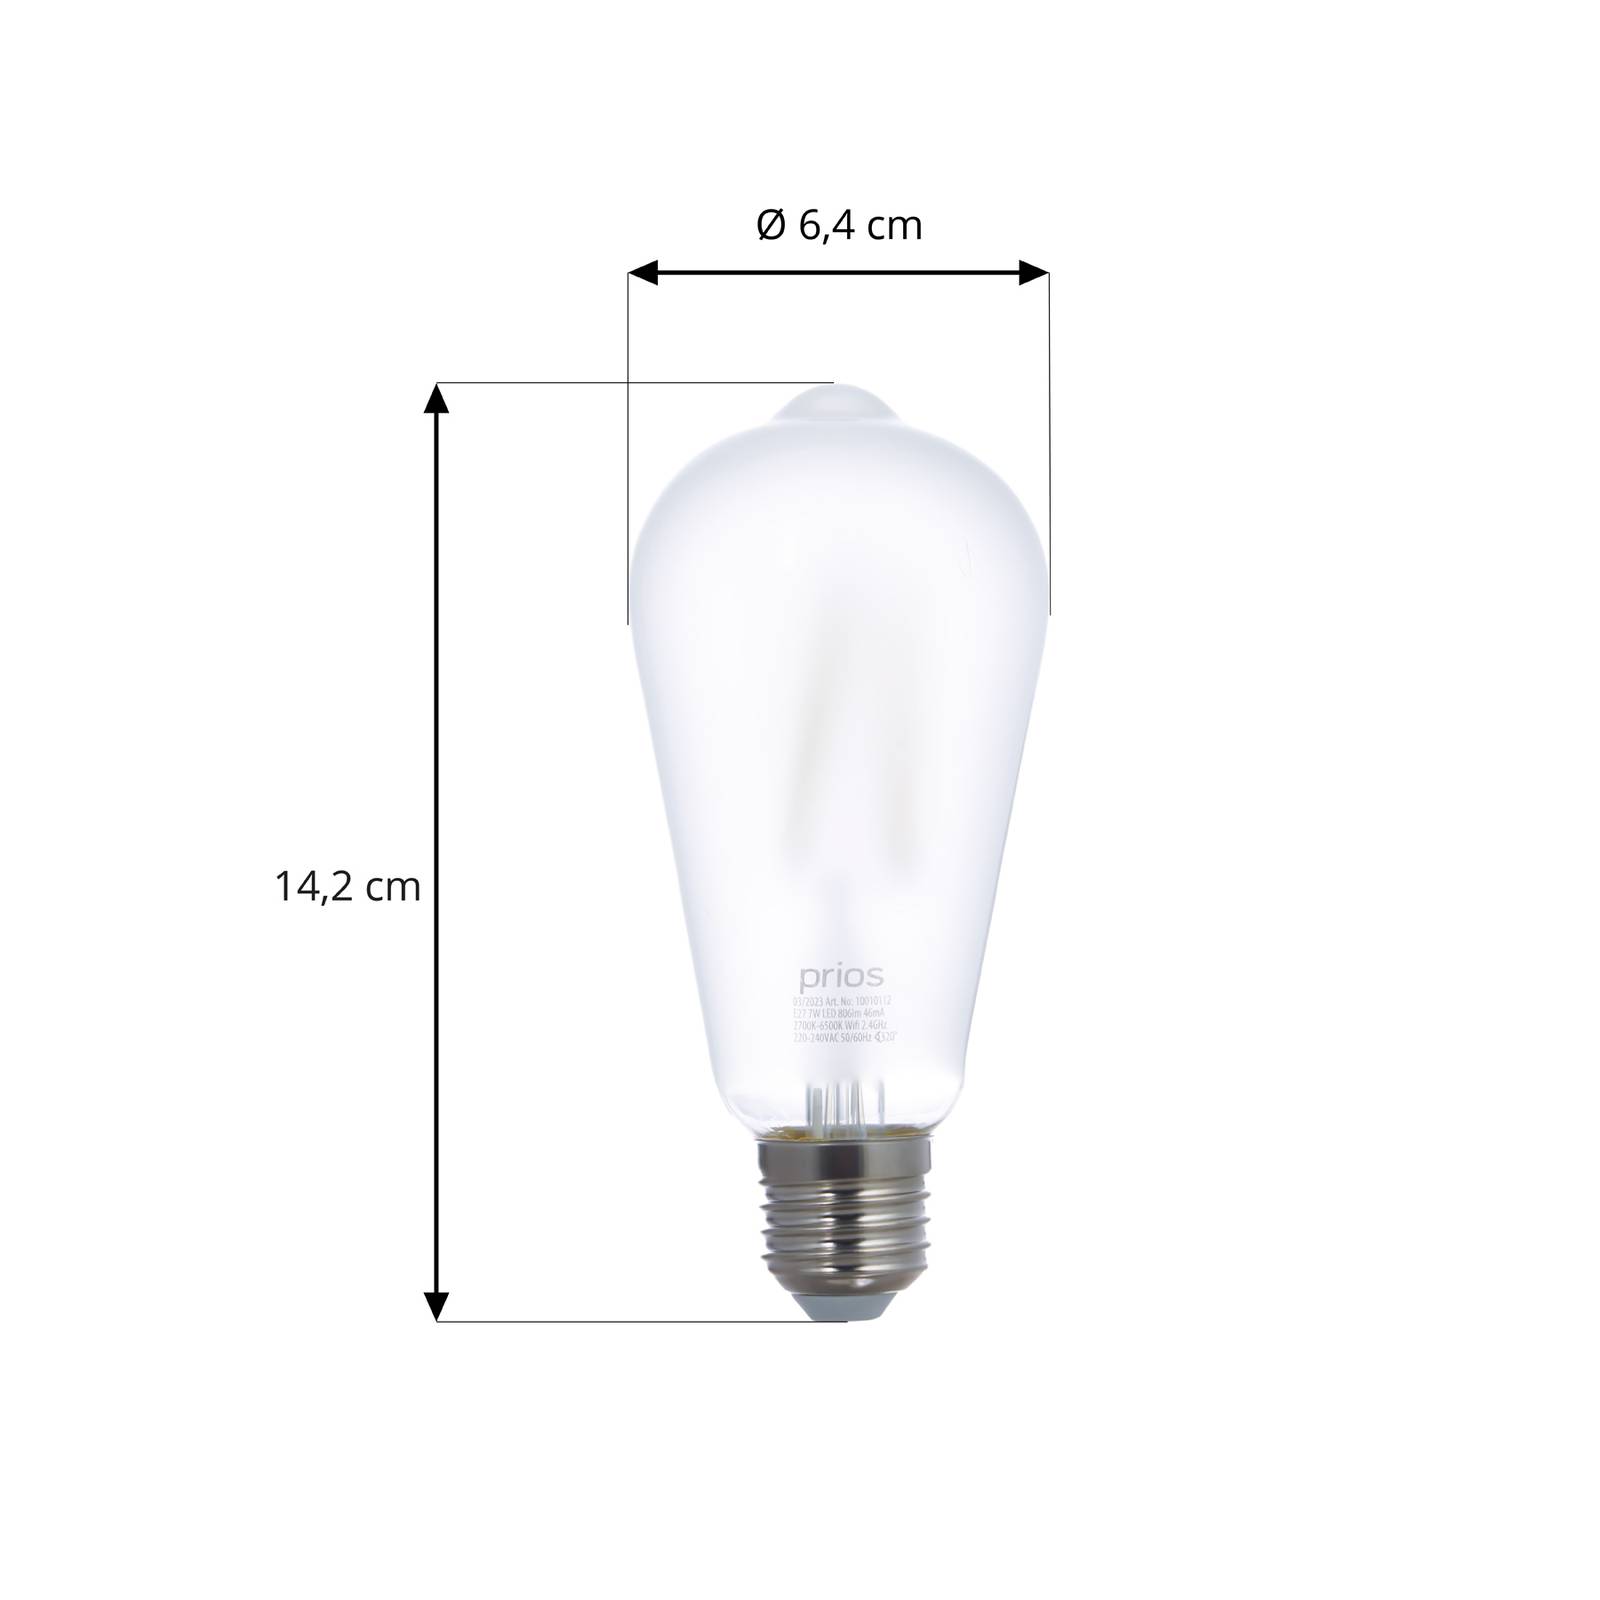 Prios Smart LED-pære matt E27 ST64 7 W Tuya WLAN CCT